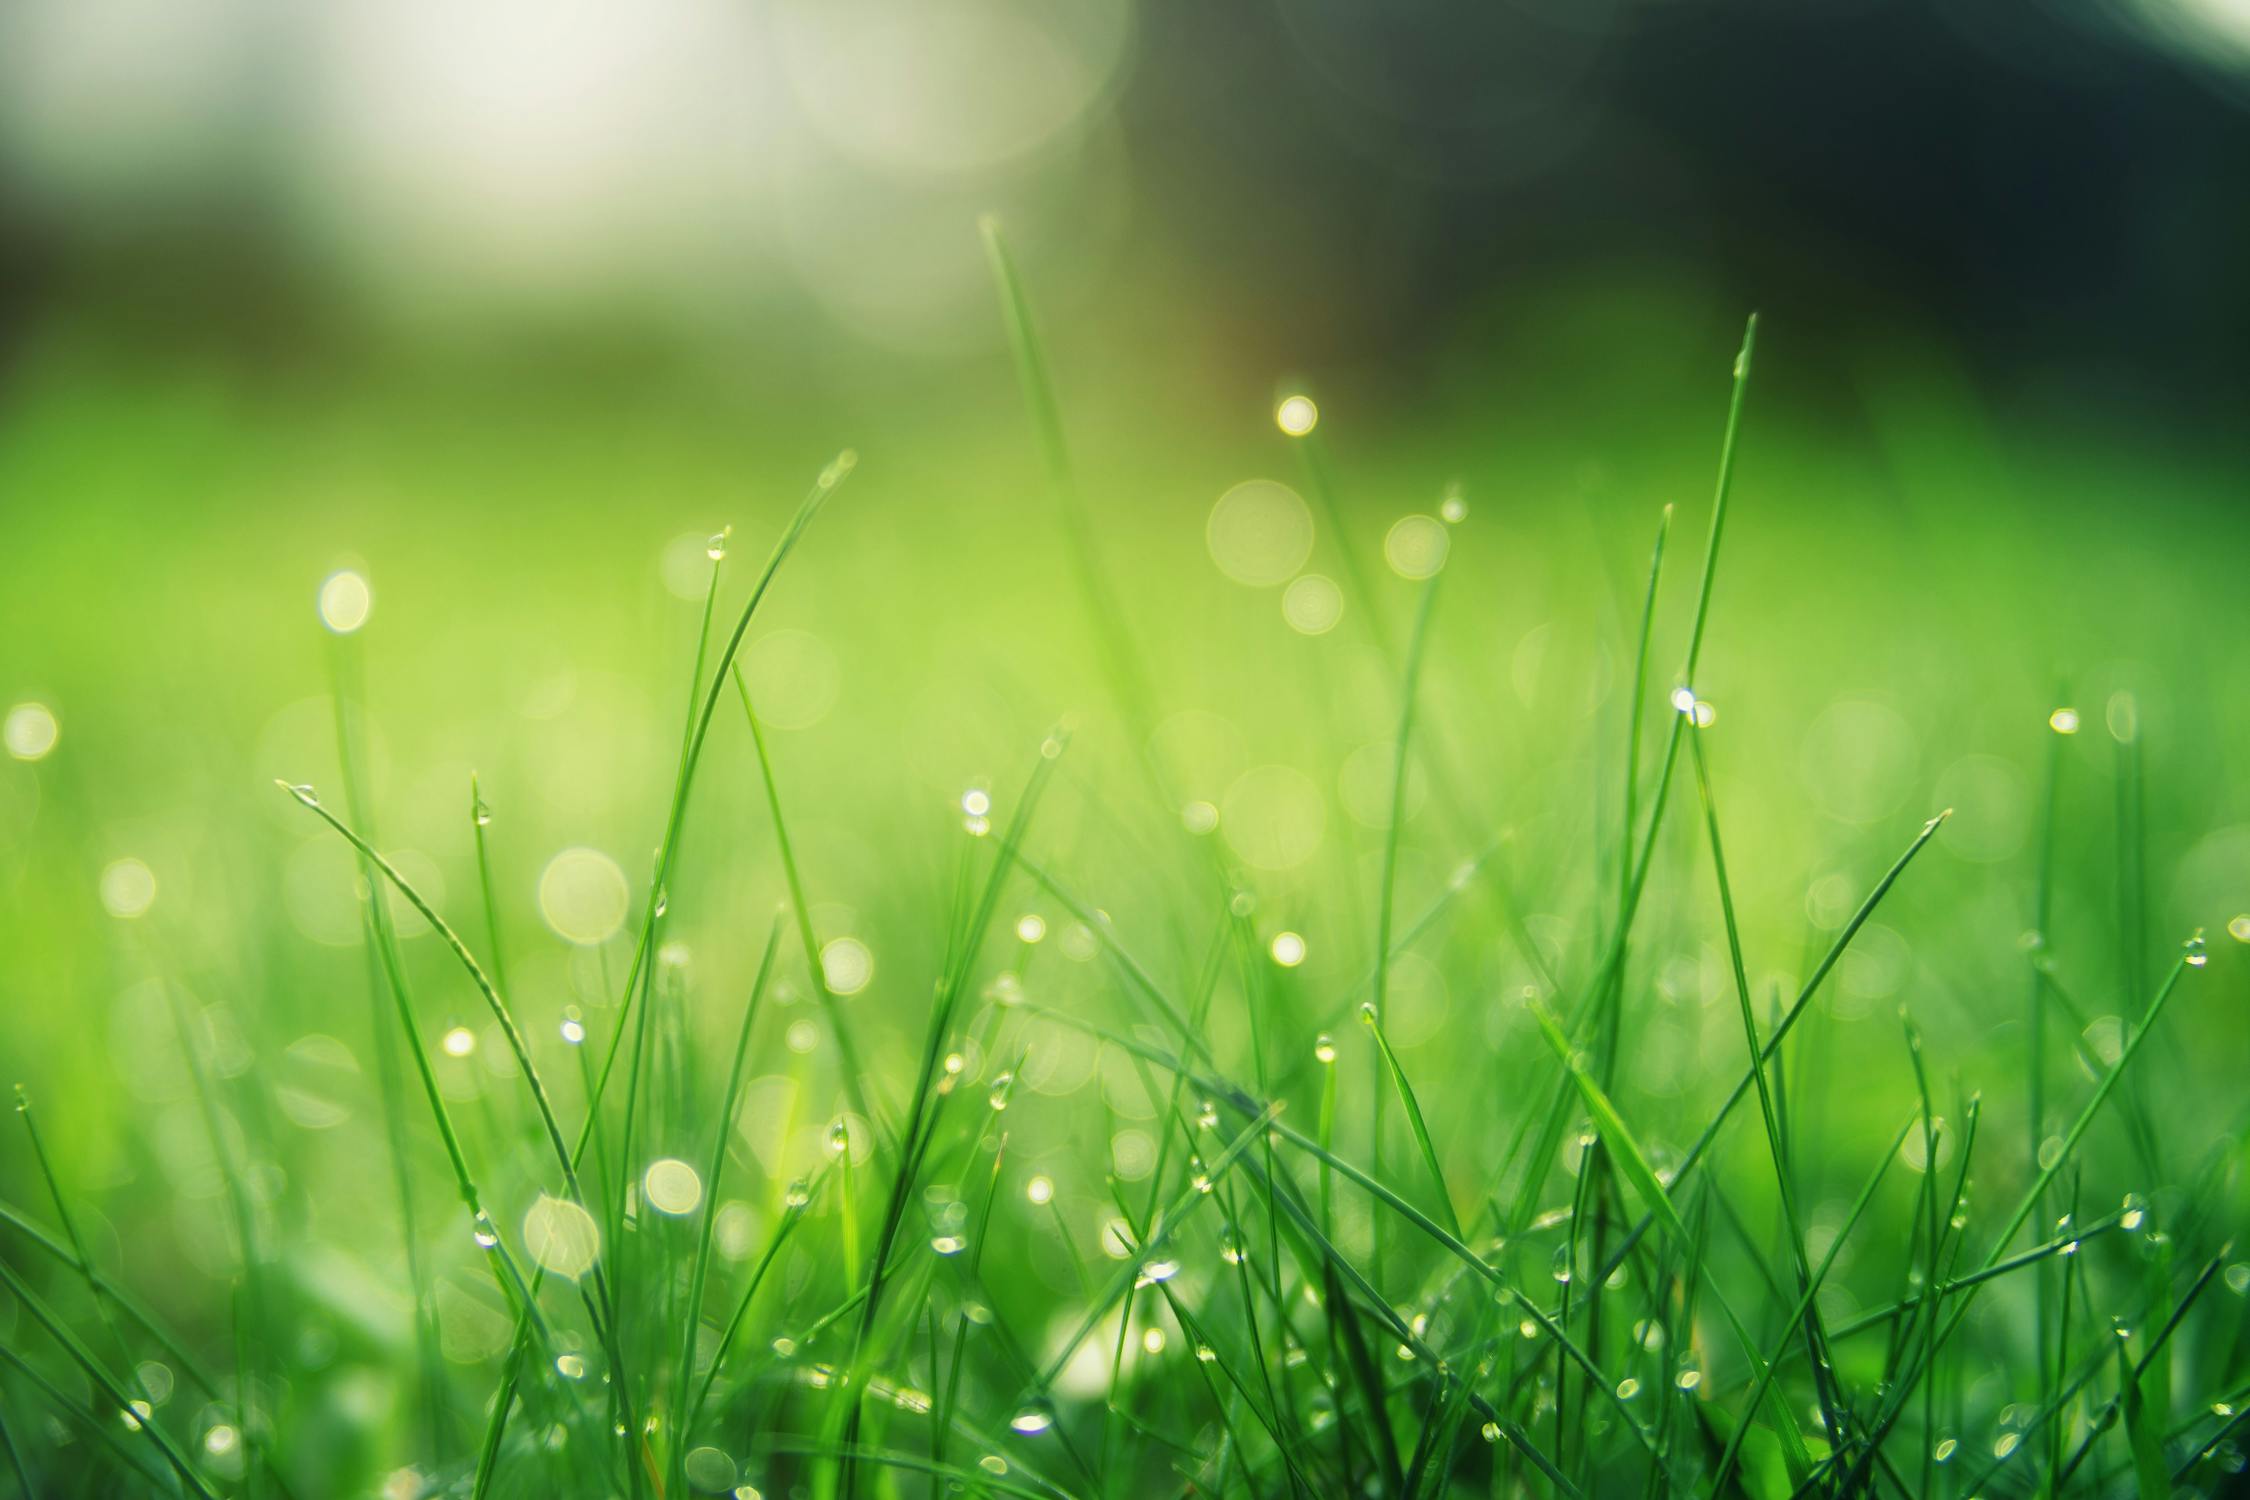 Lawn Photo by Johannes Plenio from Pexels: https://www.pexels.com/photo/closeup-photo-of-green-grass-field-1423601/